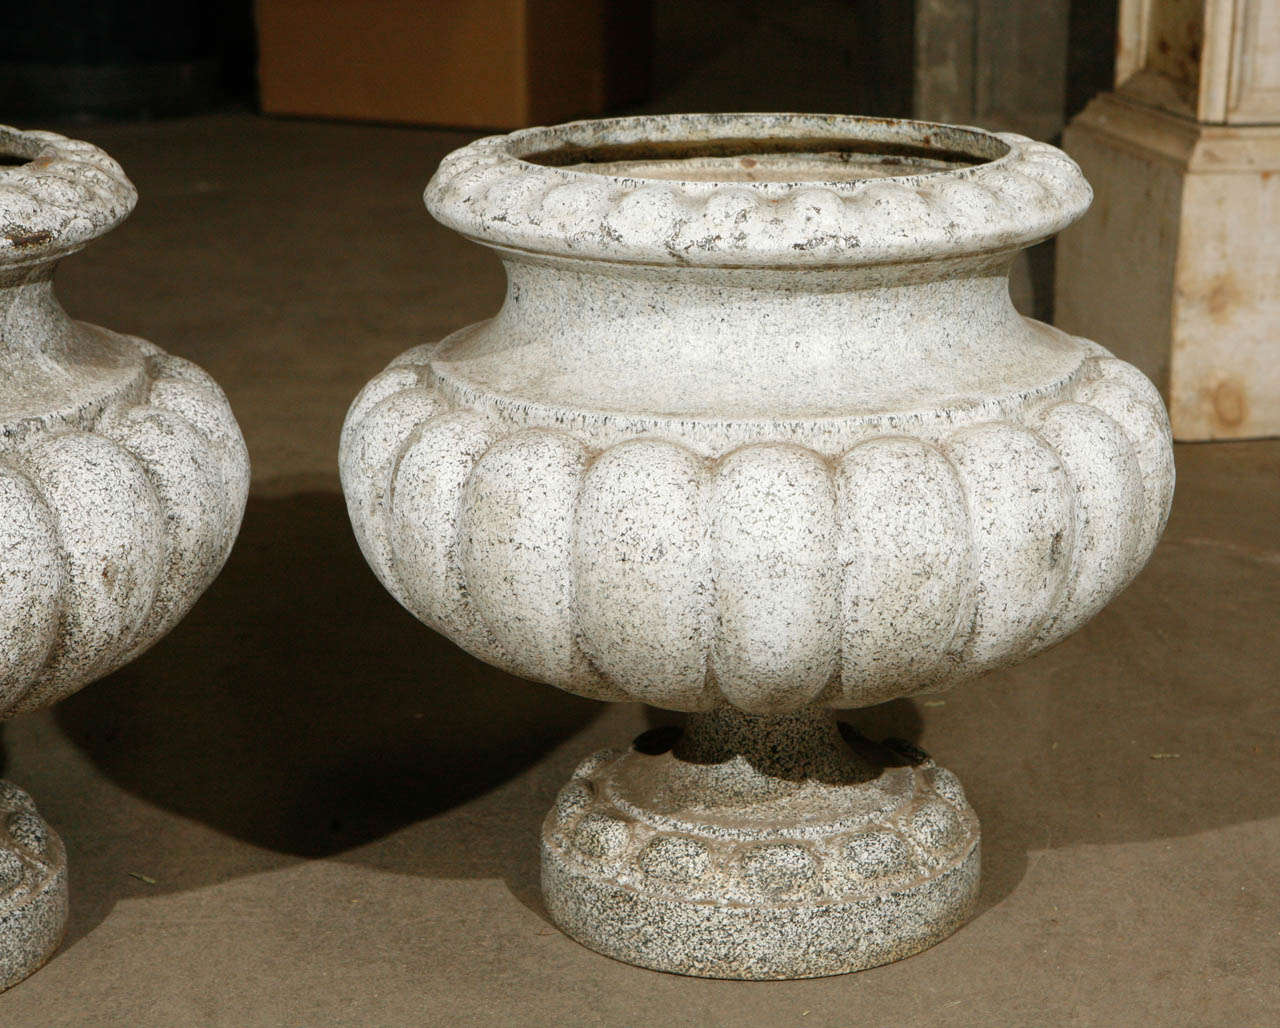 20th Century French Enameled Cast-Iron Urns